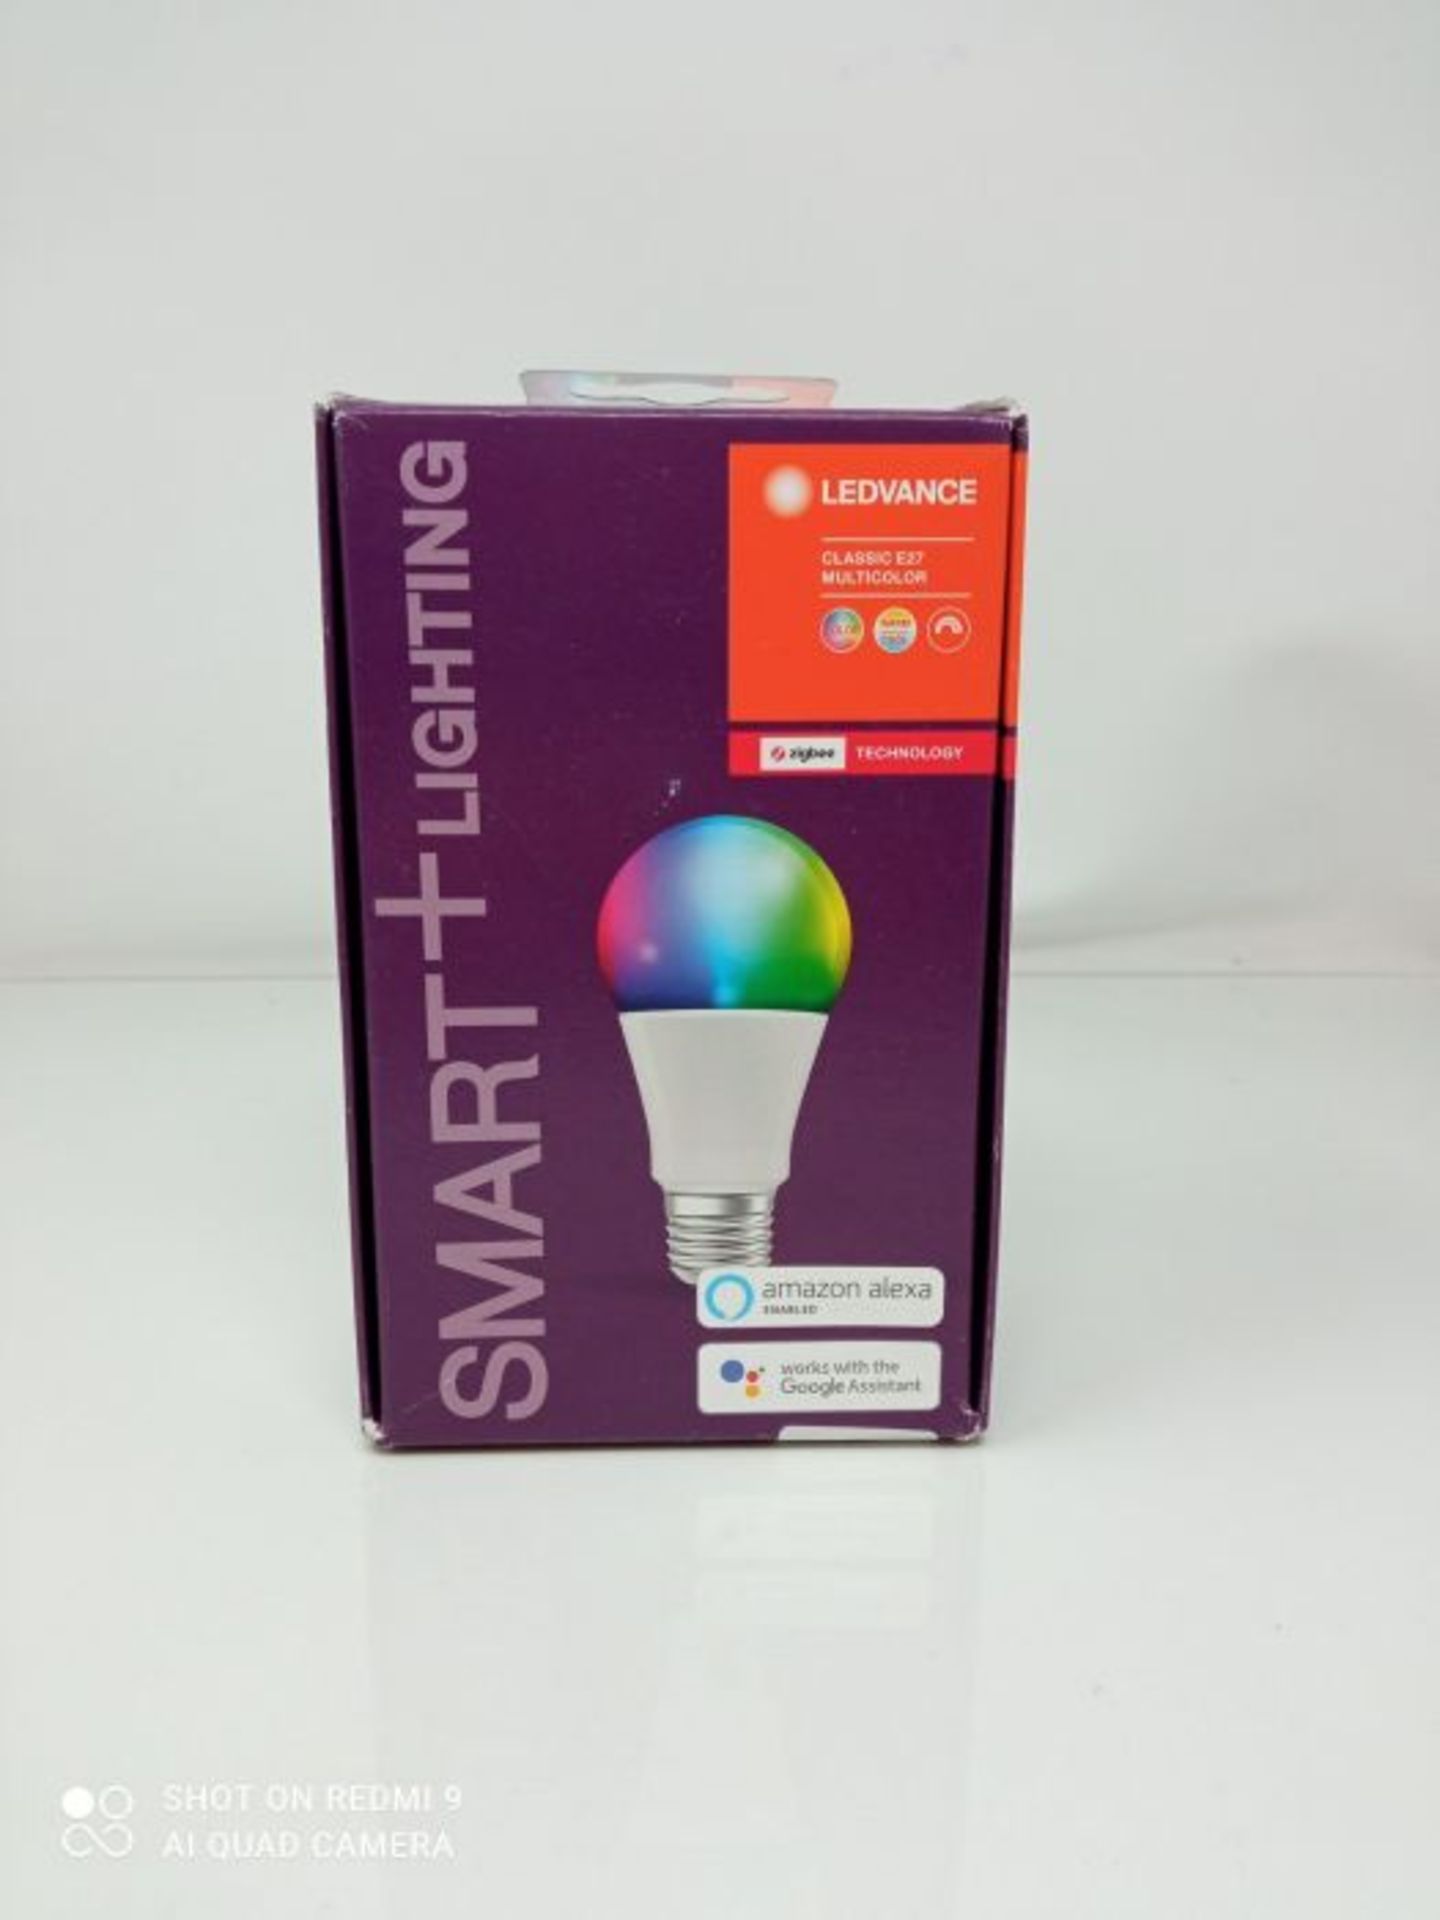 Ledvance Smart Home E27 ZigBee Light Bulb, Rgbw Colour Changing - Image 2 of 3